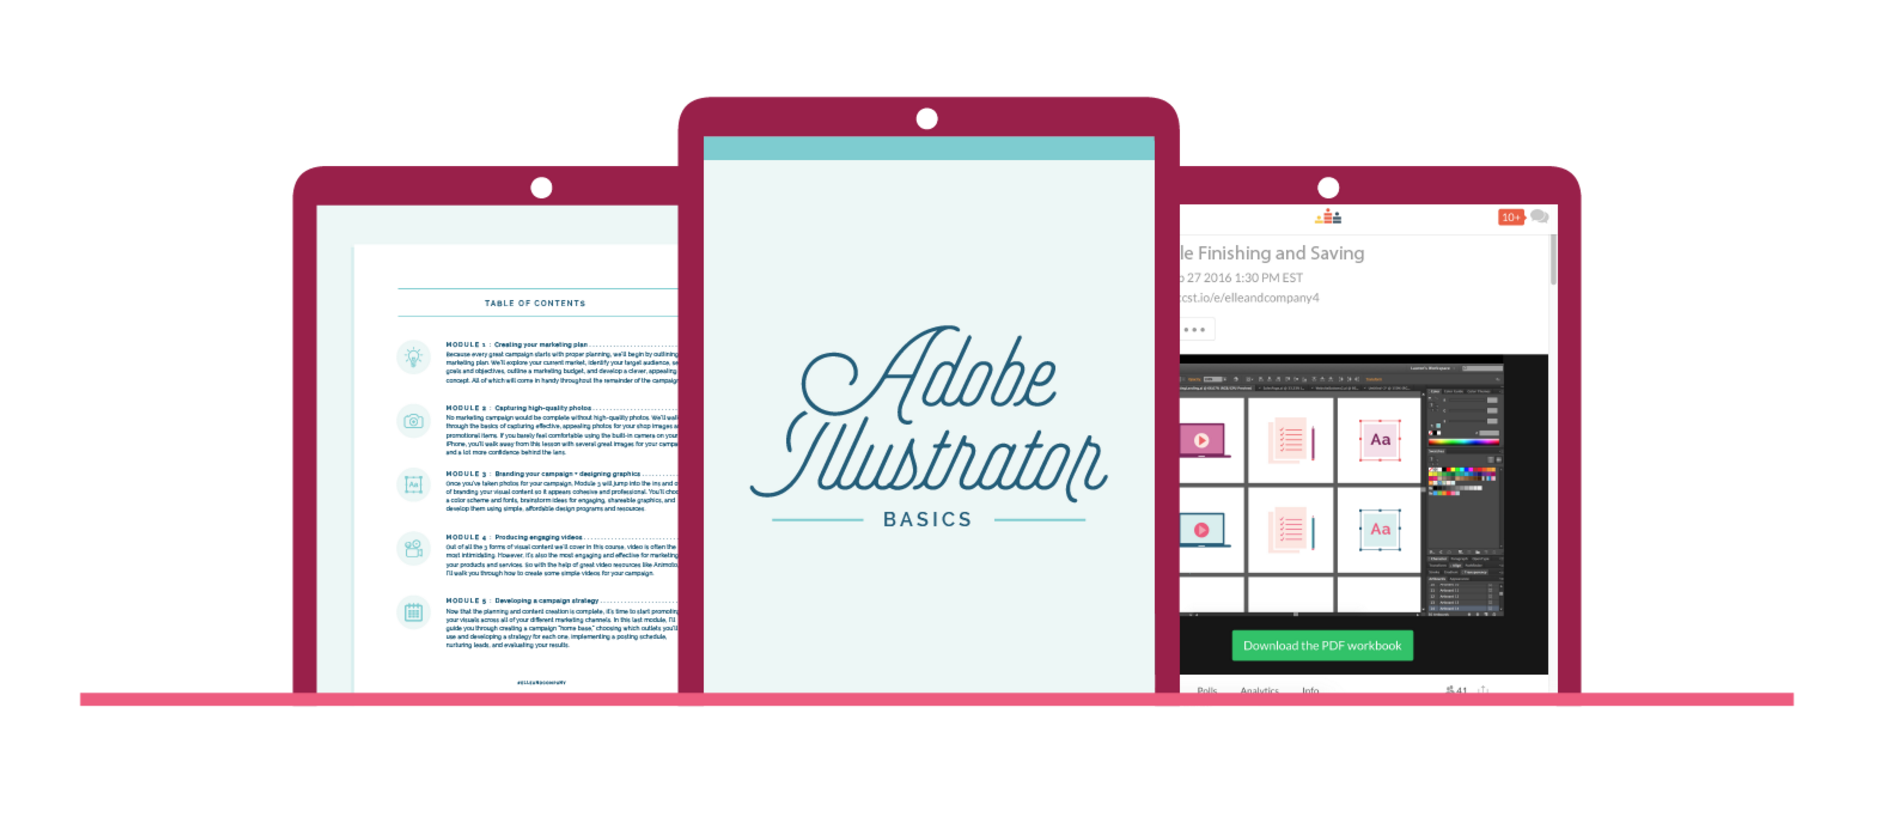 Adobe Illustrator Basics Online Course by Elle & Company